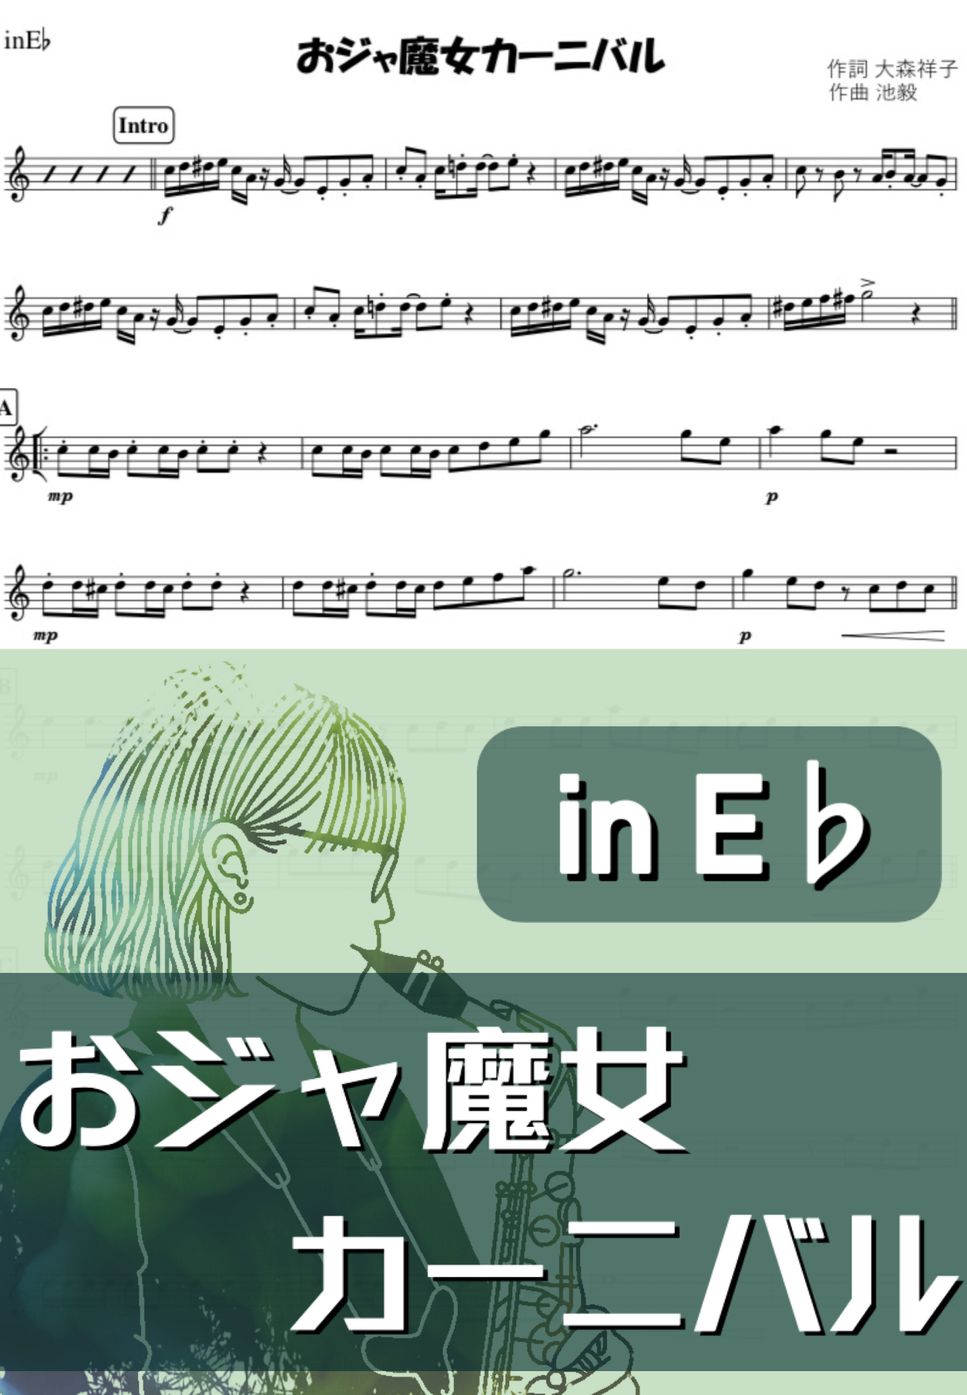 MAHO堂 - おジャ魔女カーニバル (E♭) by kanamusic